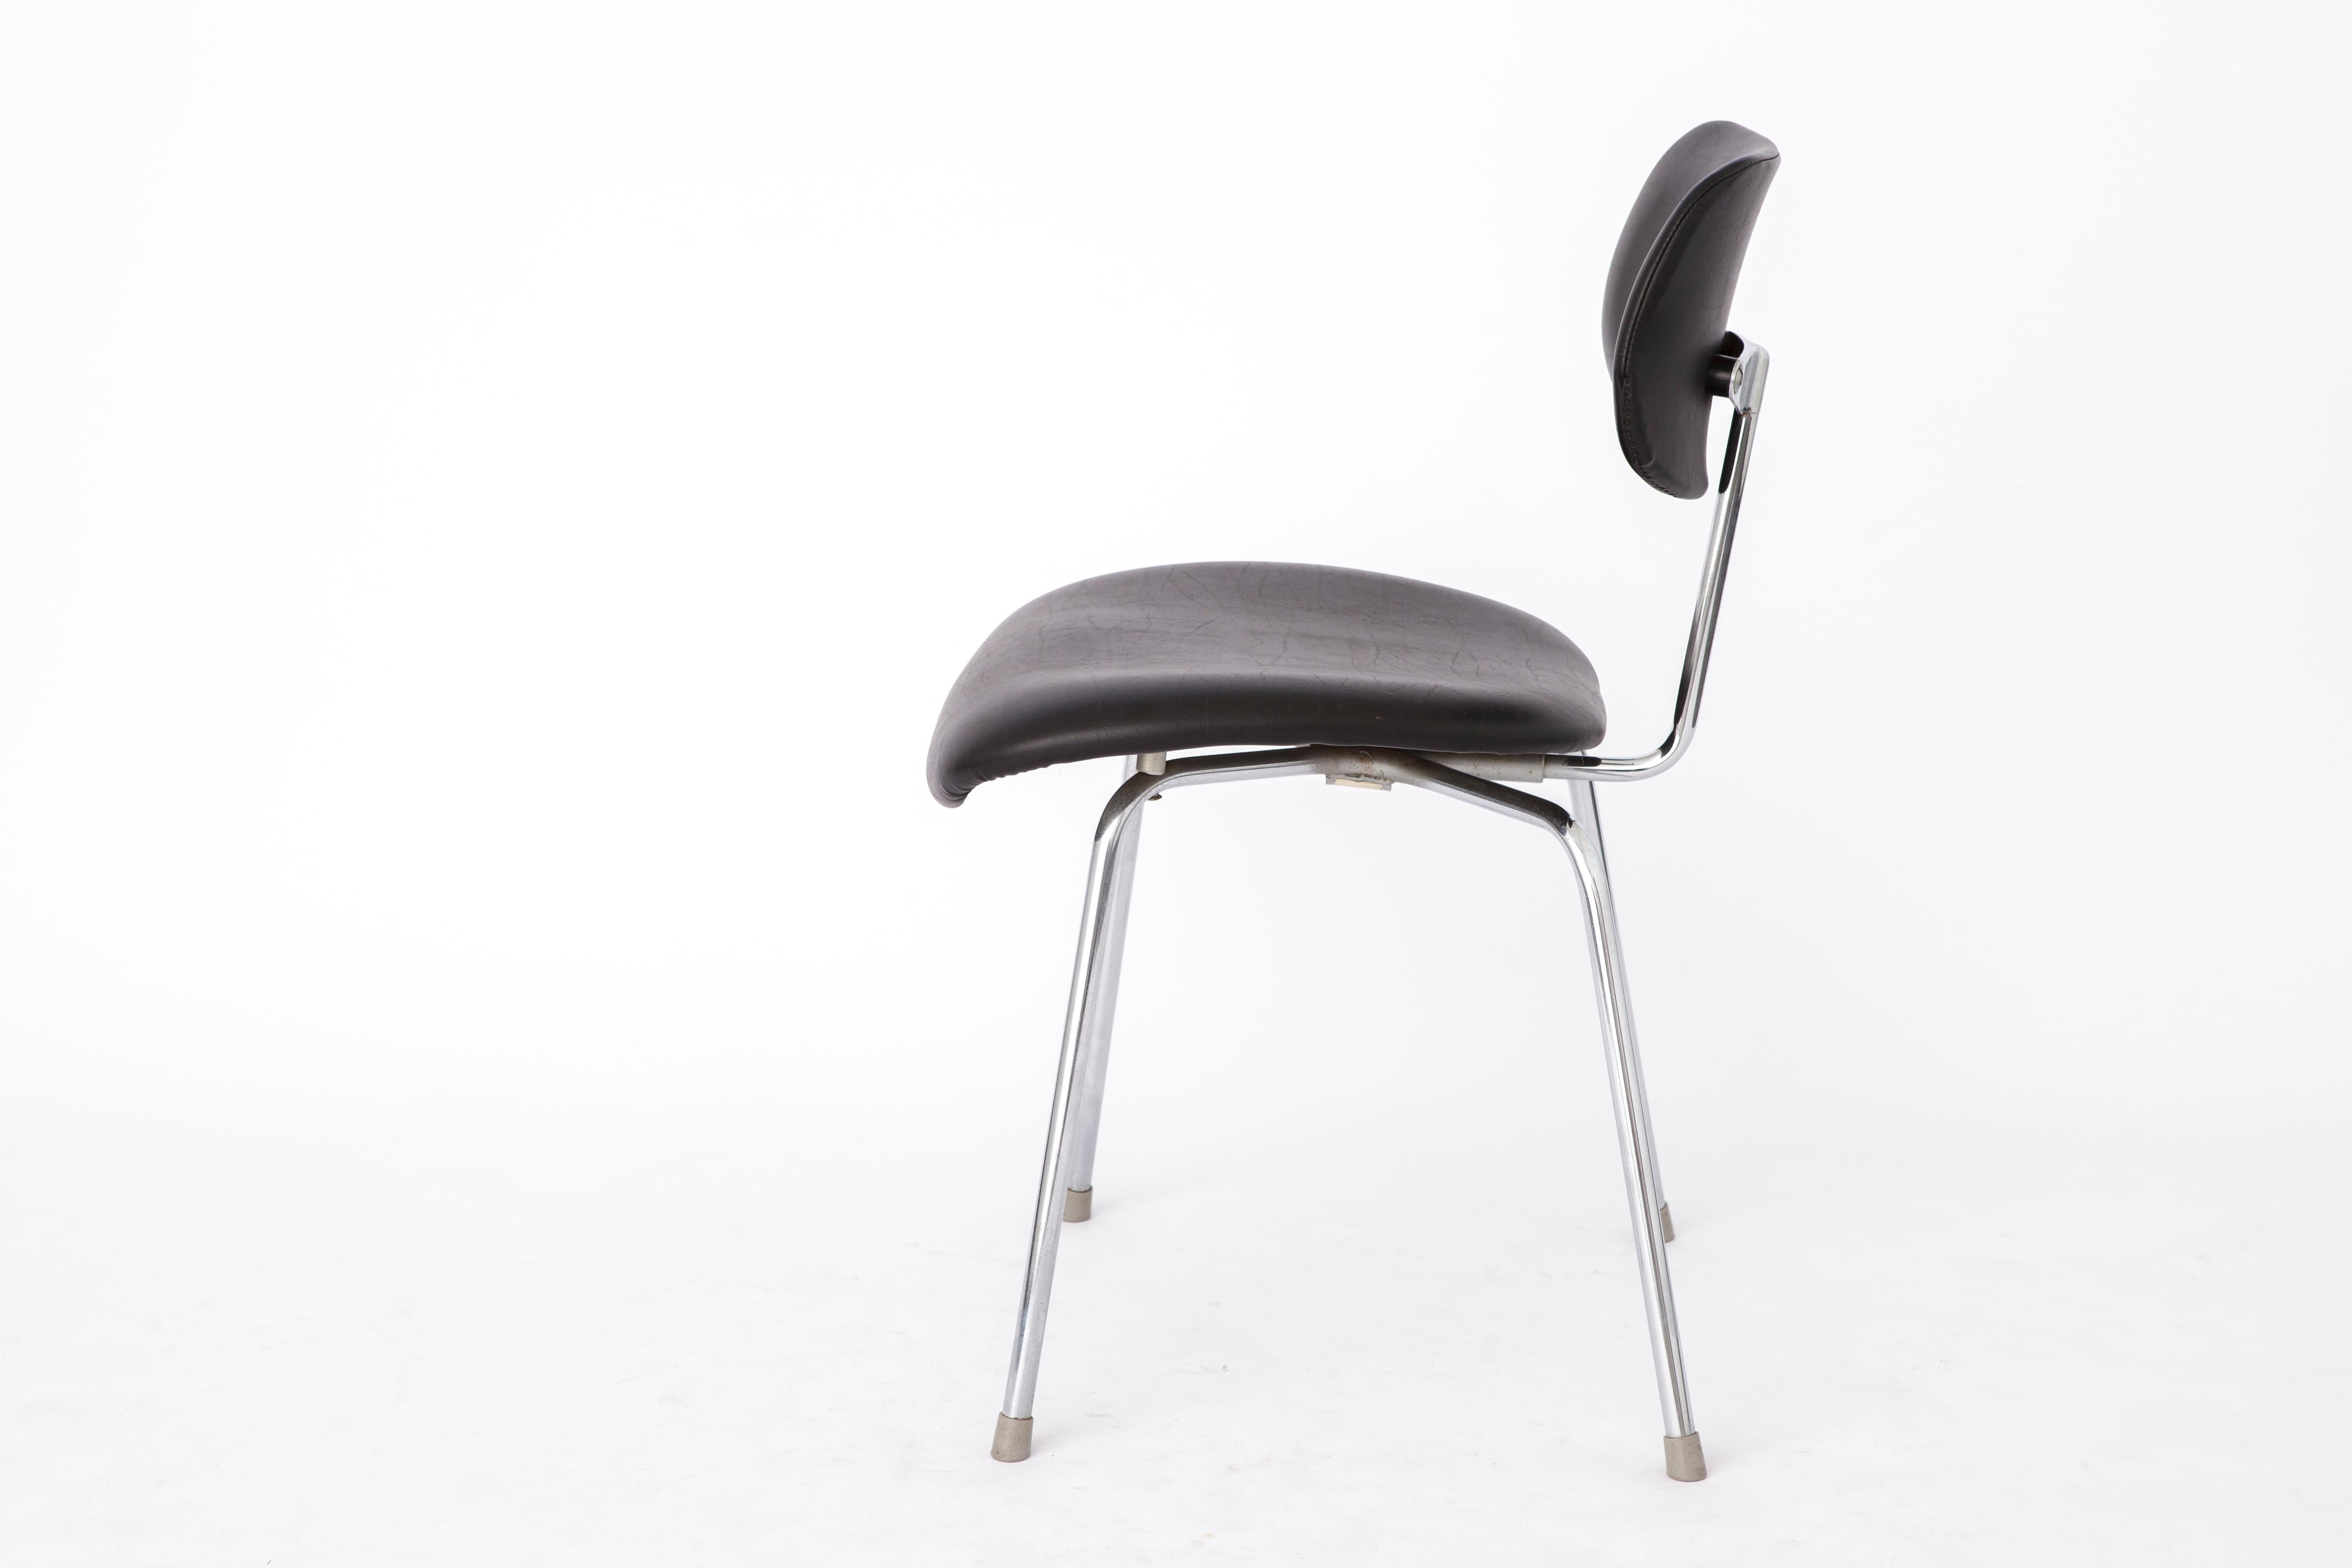 Polished Vintage chair by Egon Eiermann, 1950s Germany, model SE68, for Wilde & Spieth, b